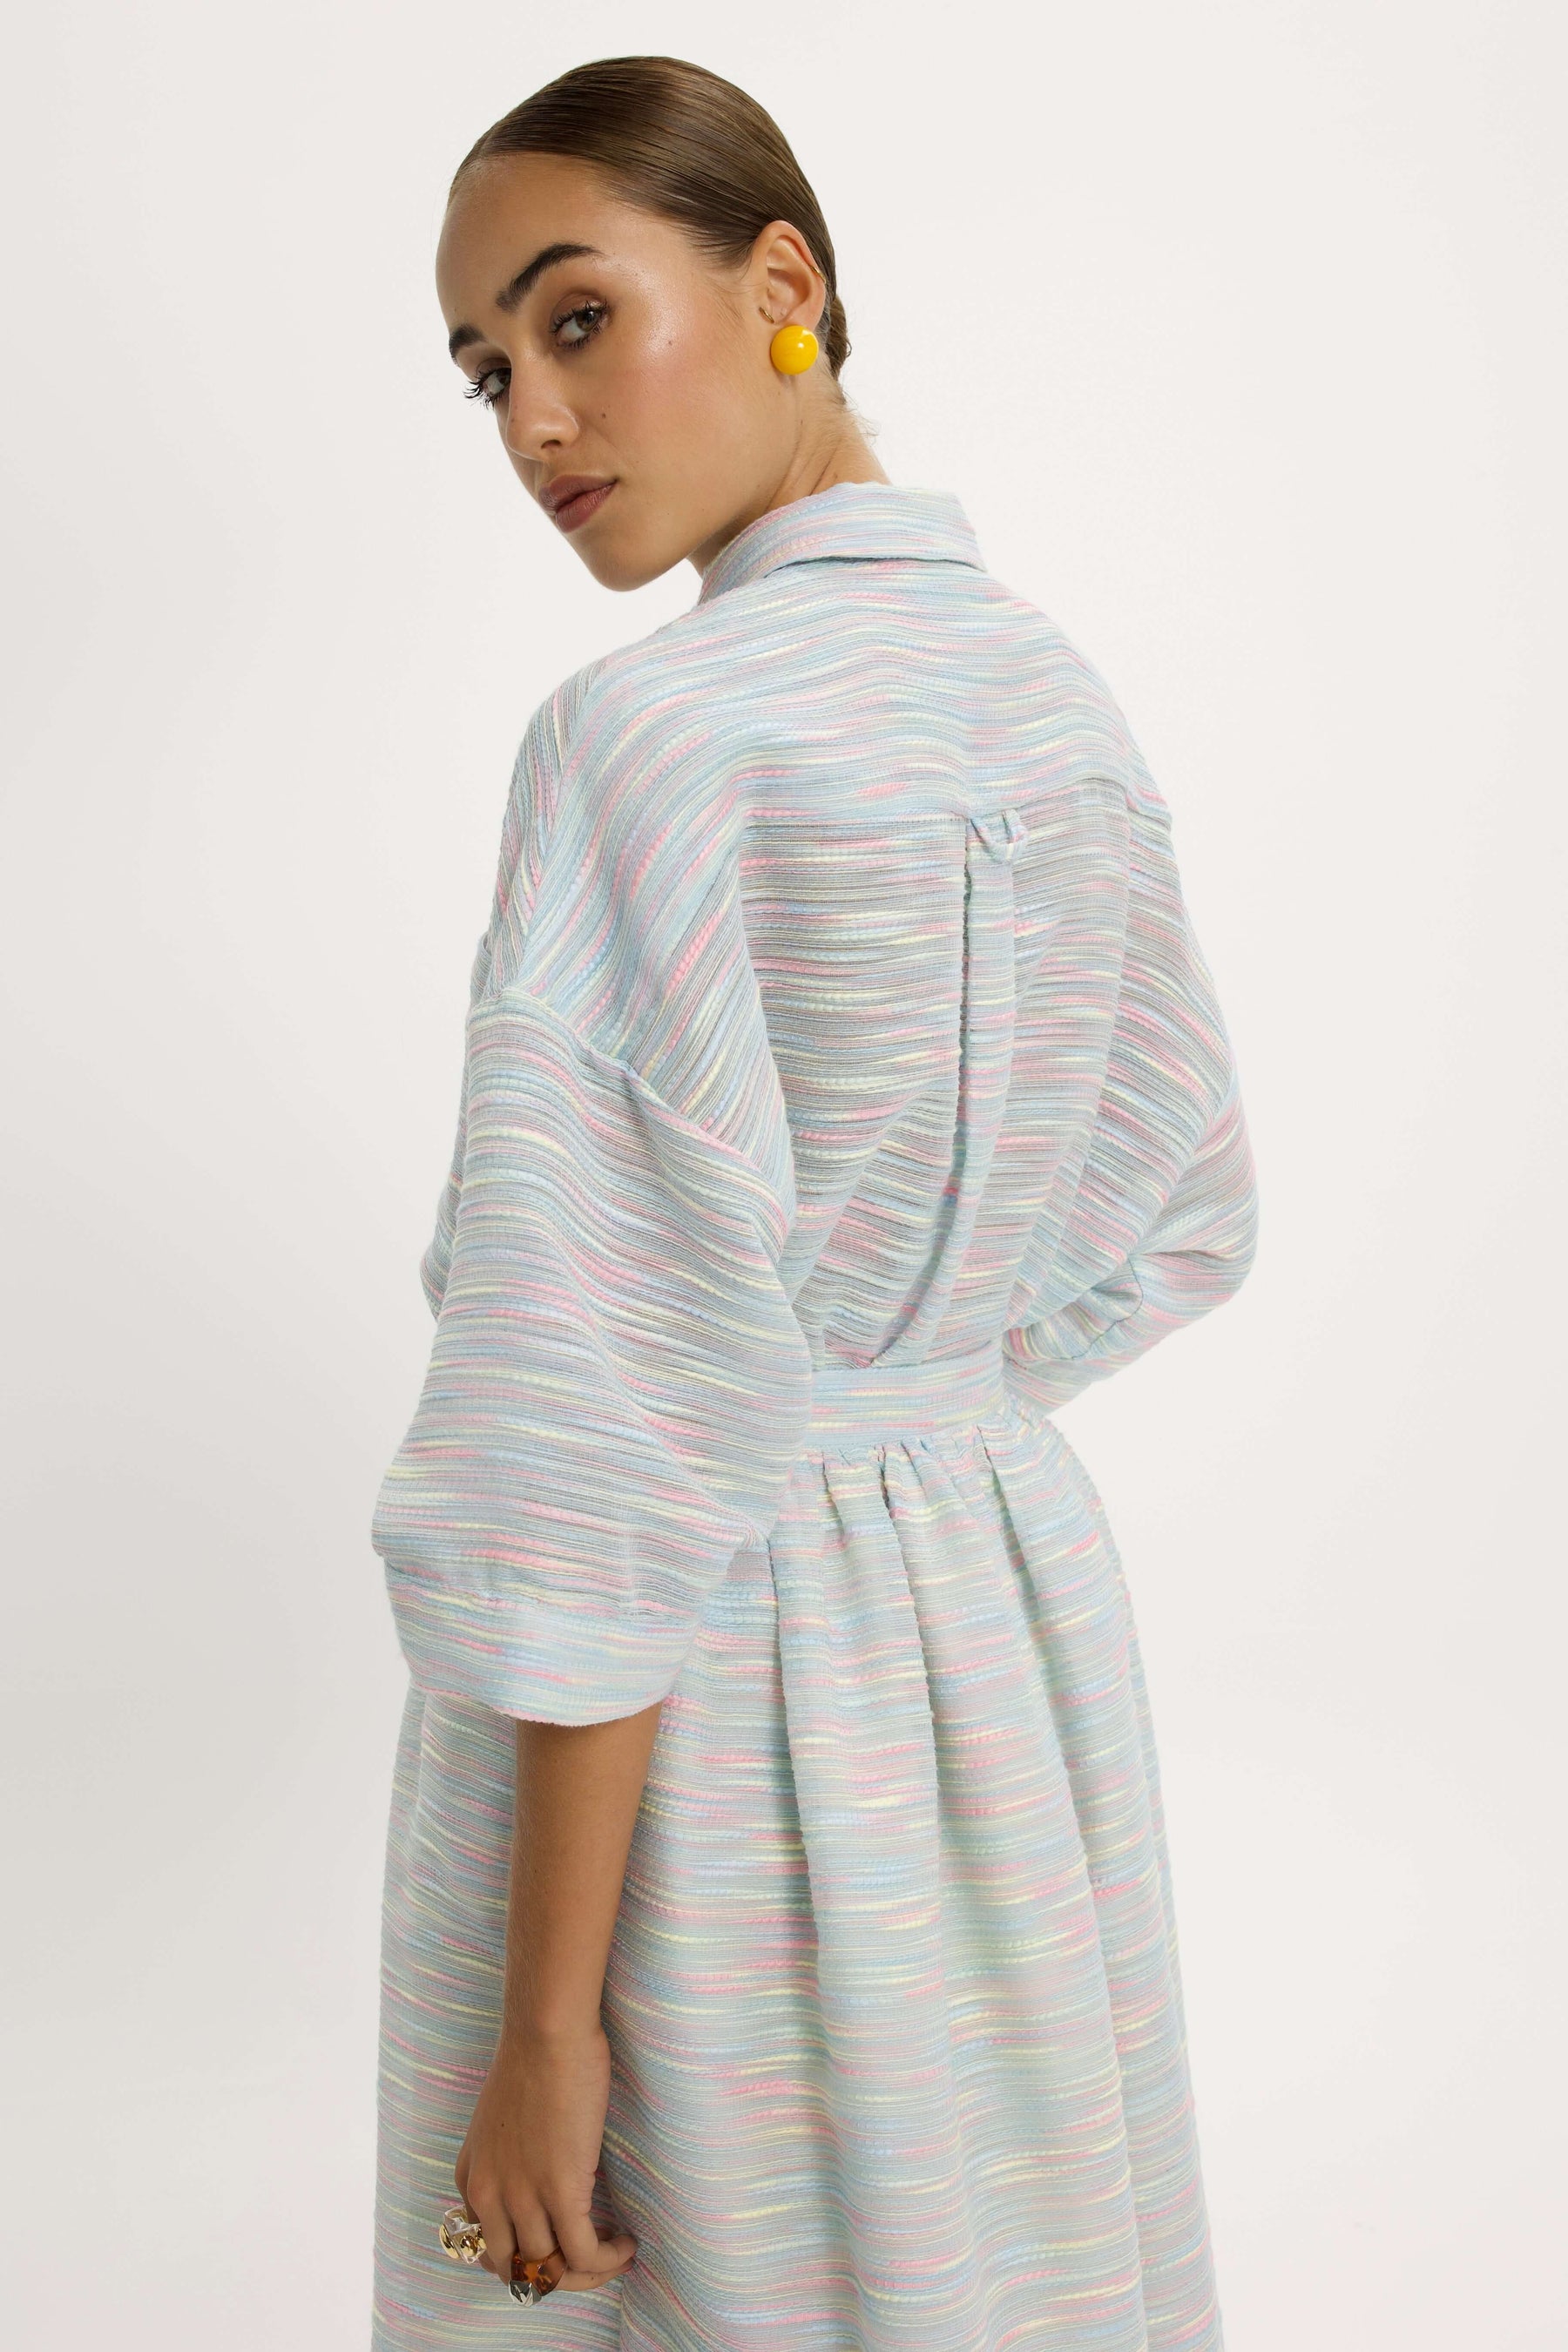 Astree Shirt in Woven Fabric Rainbow